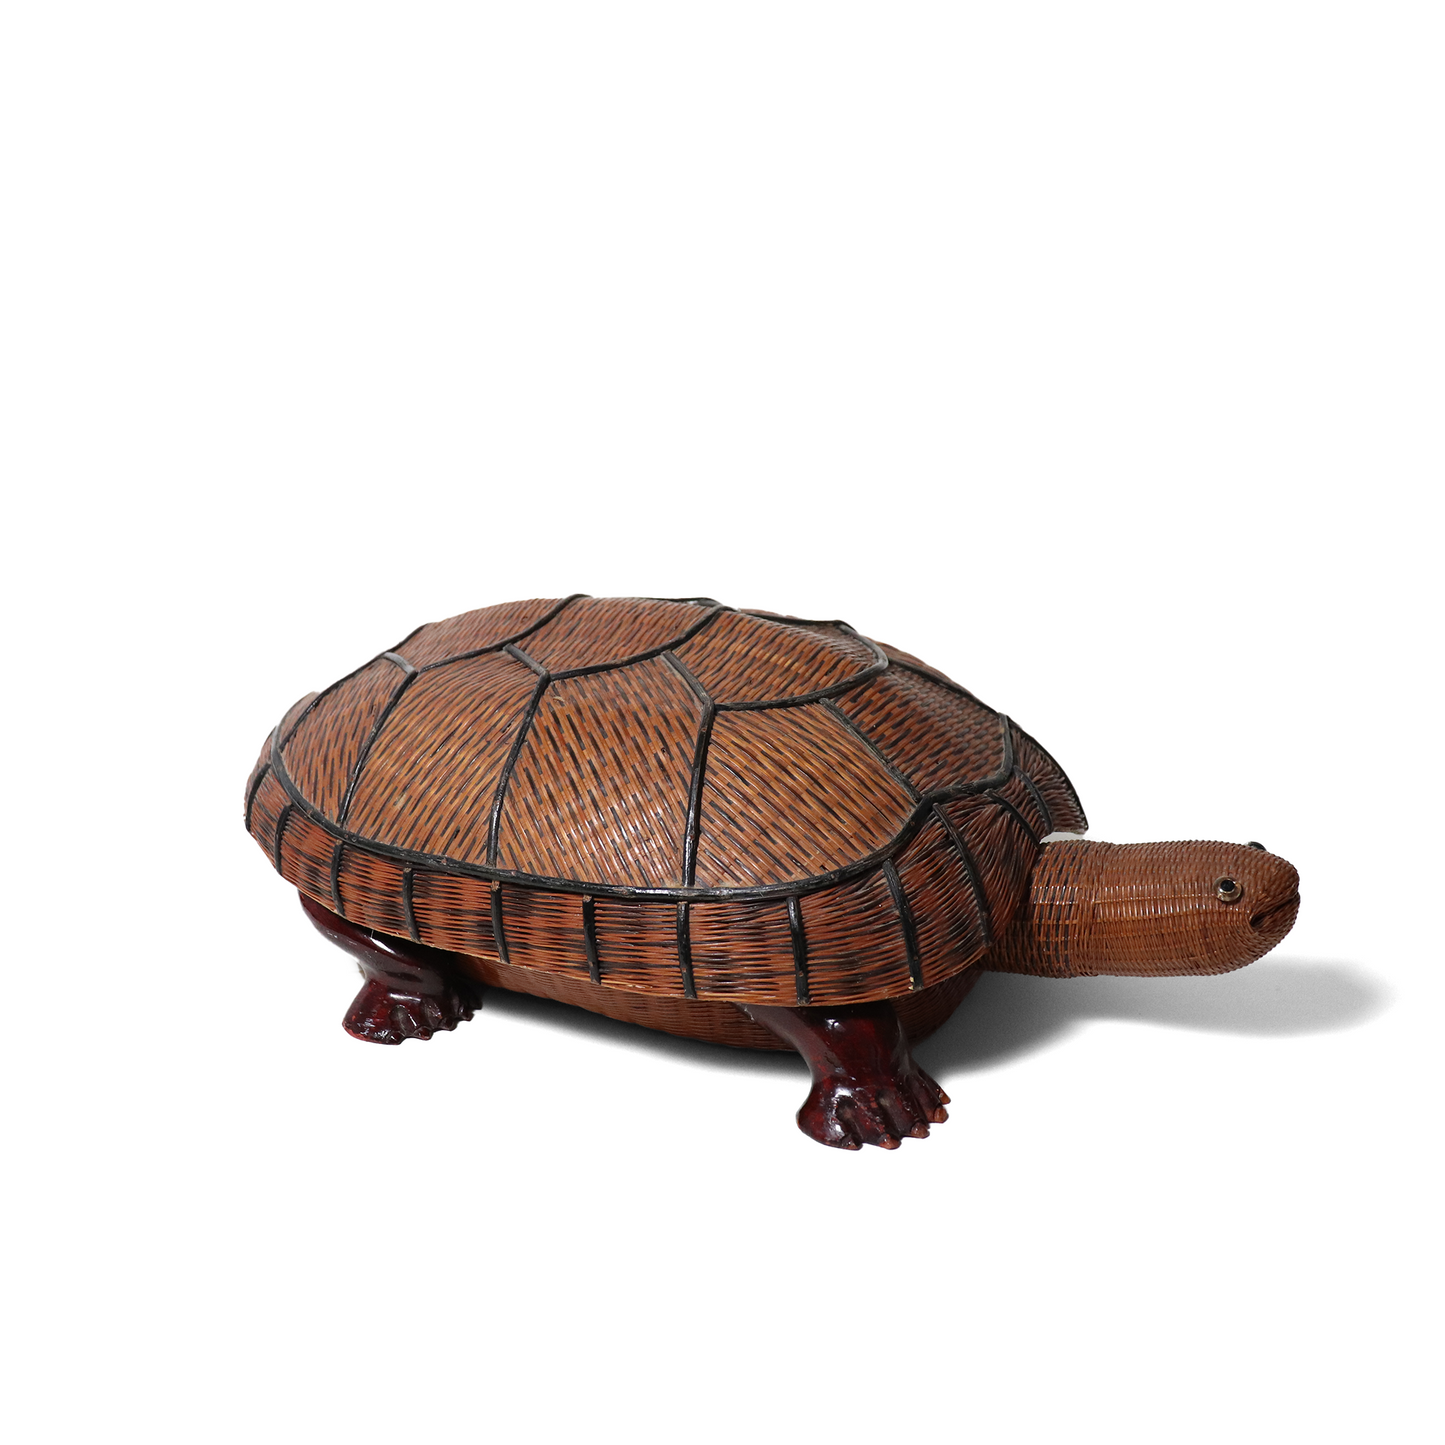 Chinese wicker turtle box